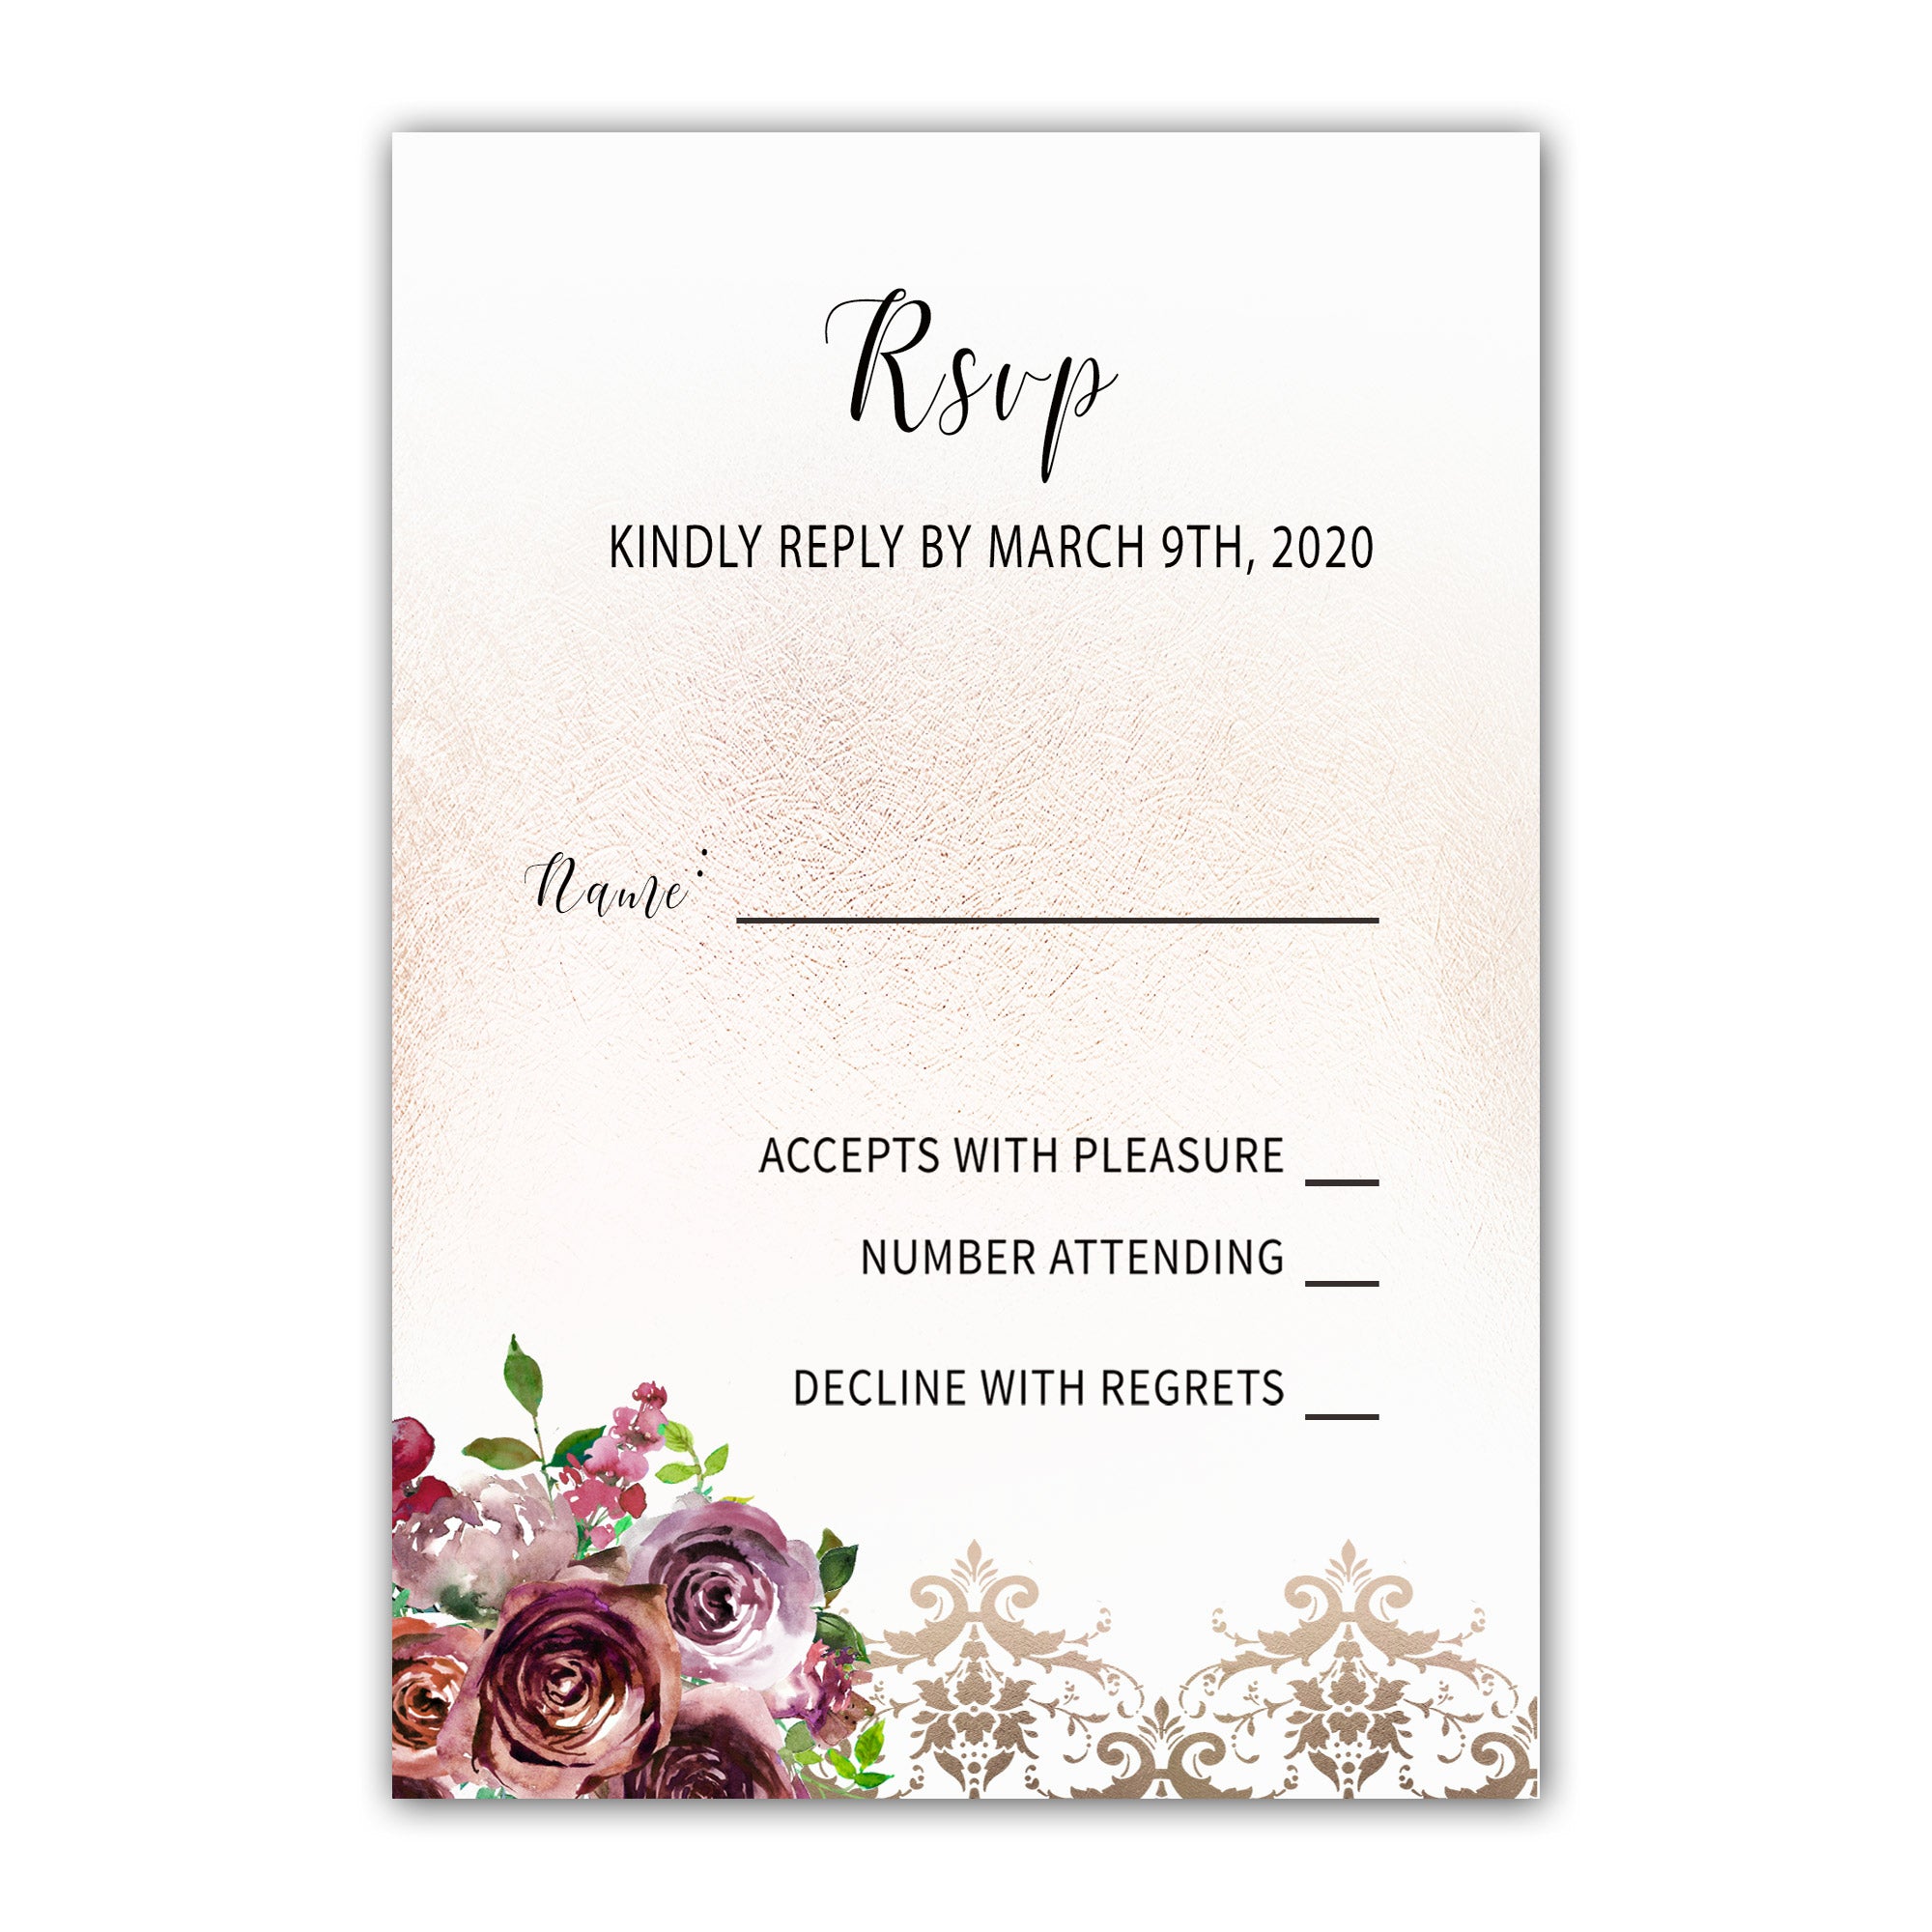 100 RSVP cards burgundy floral wedding personalized